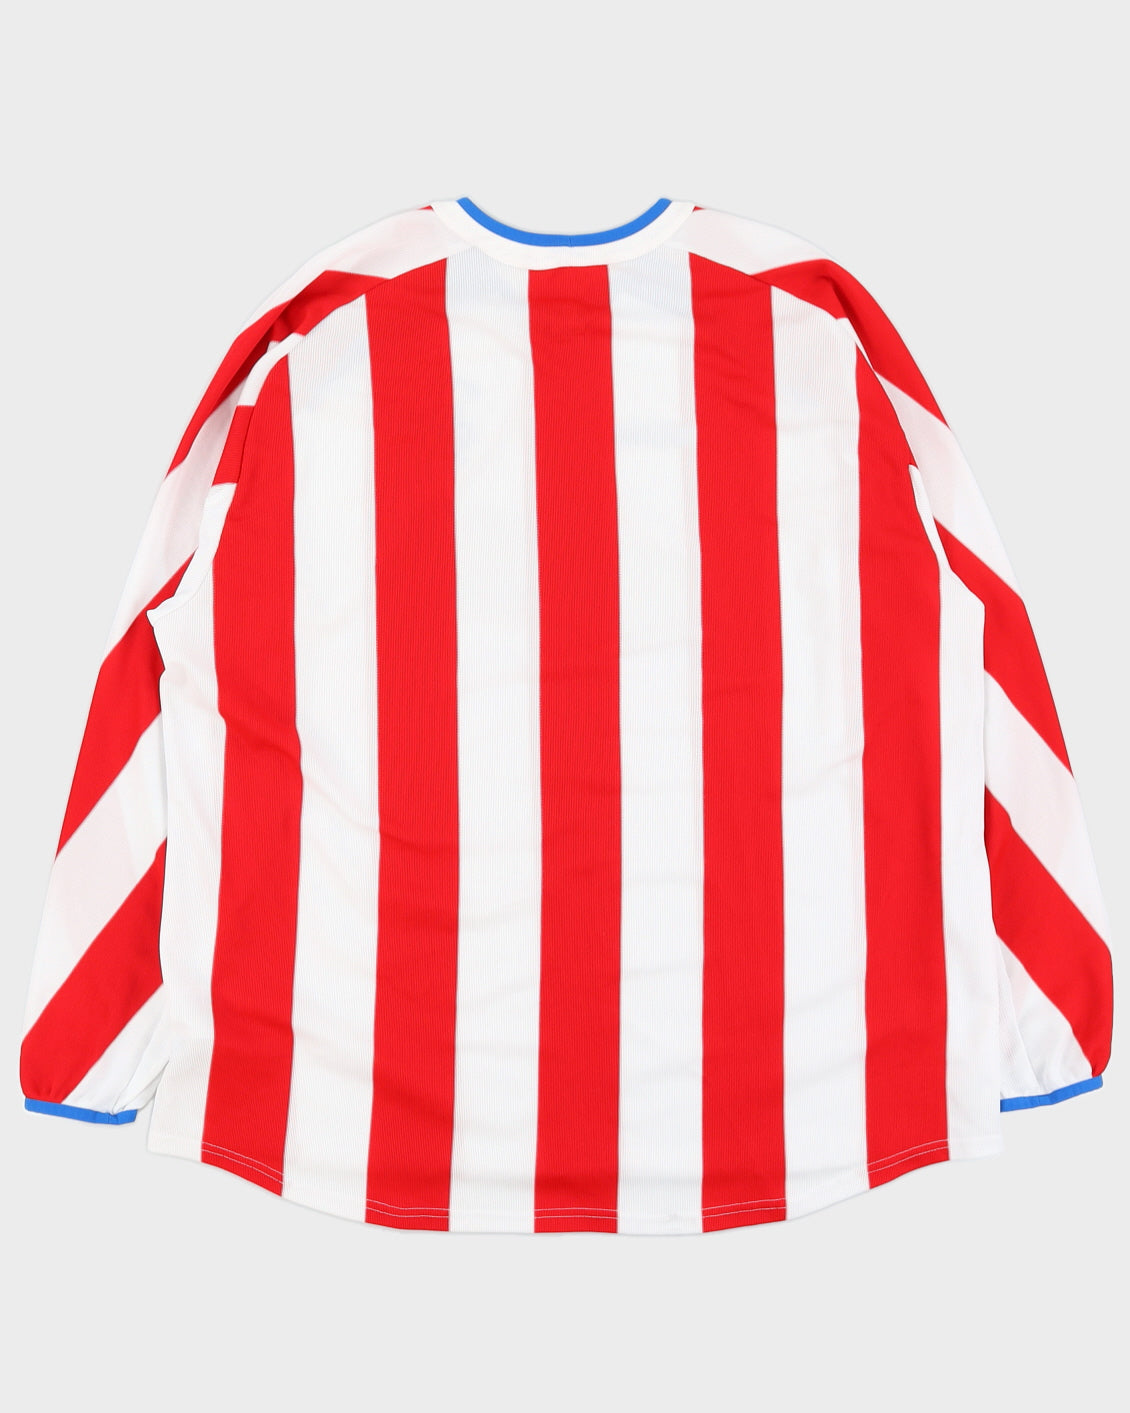 '03/04 Diadora Glasgow Rangers Football Shirt - XXL